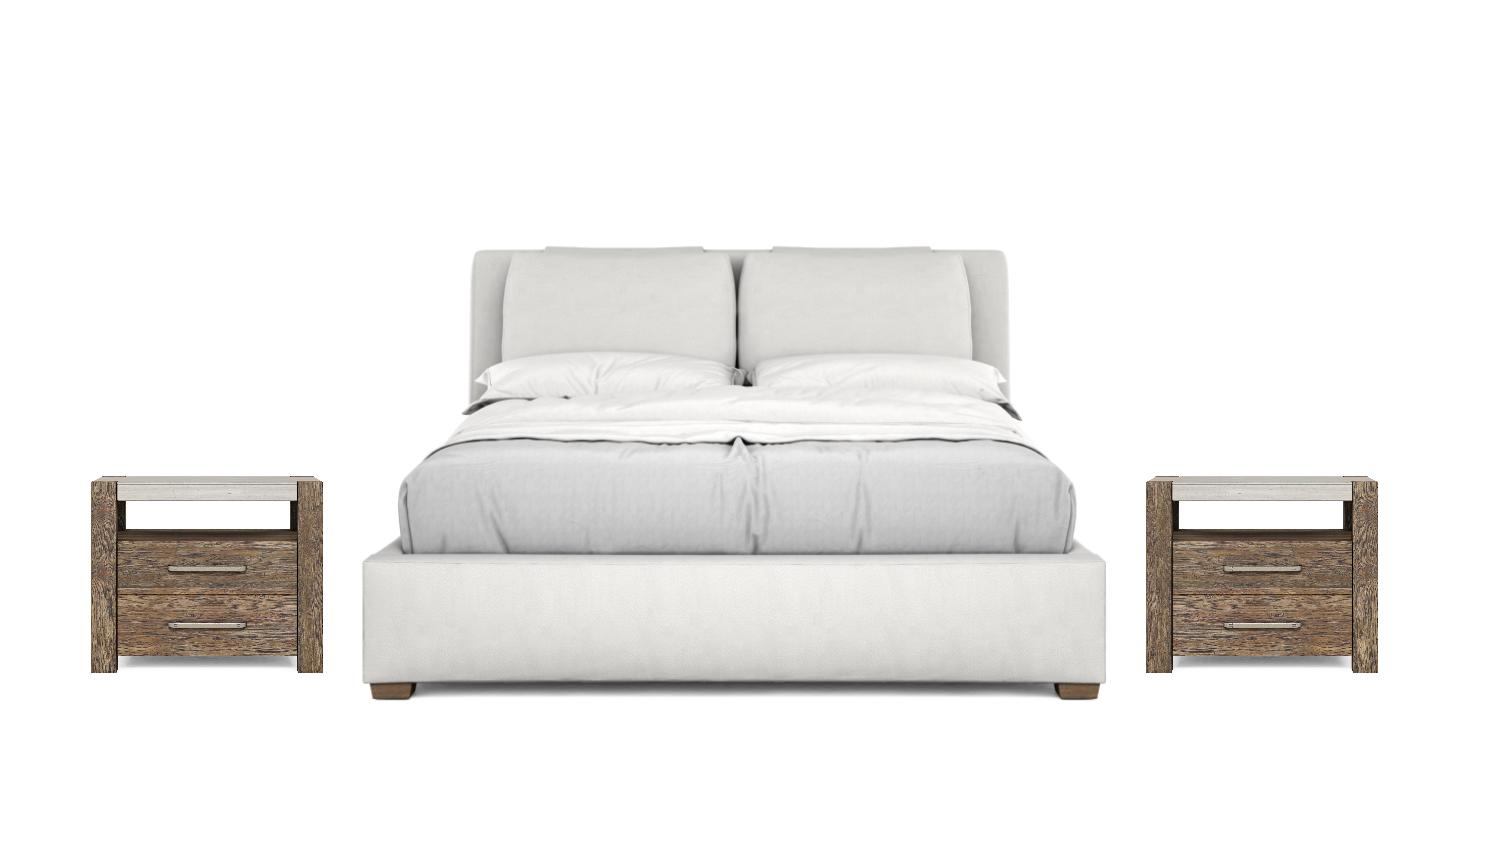 Modern, Transitional Platform Bedroom Set Stockyard 284127-2303-WH-2N-3PCS in Light Gray, White Fabric